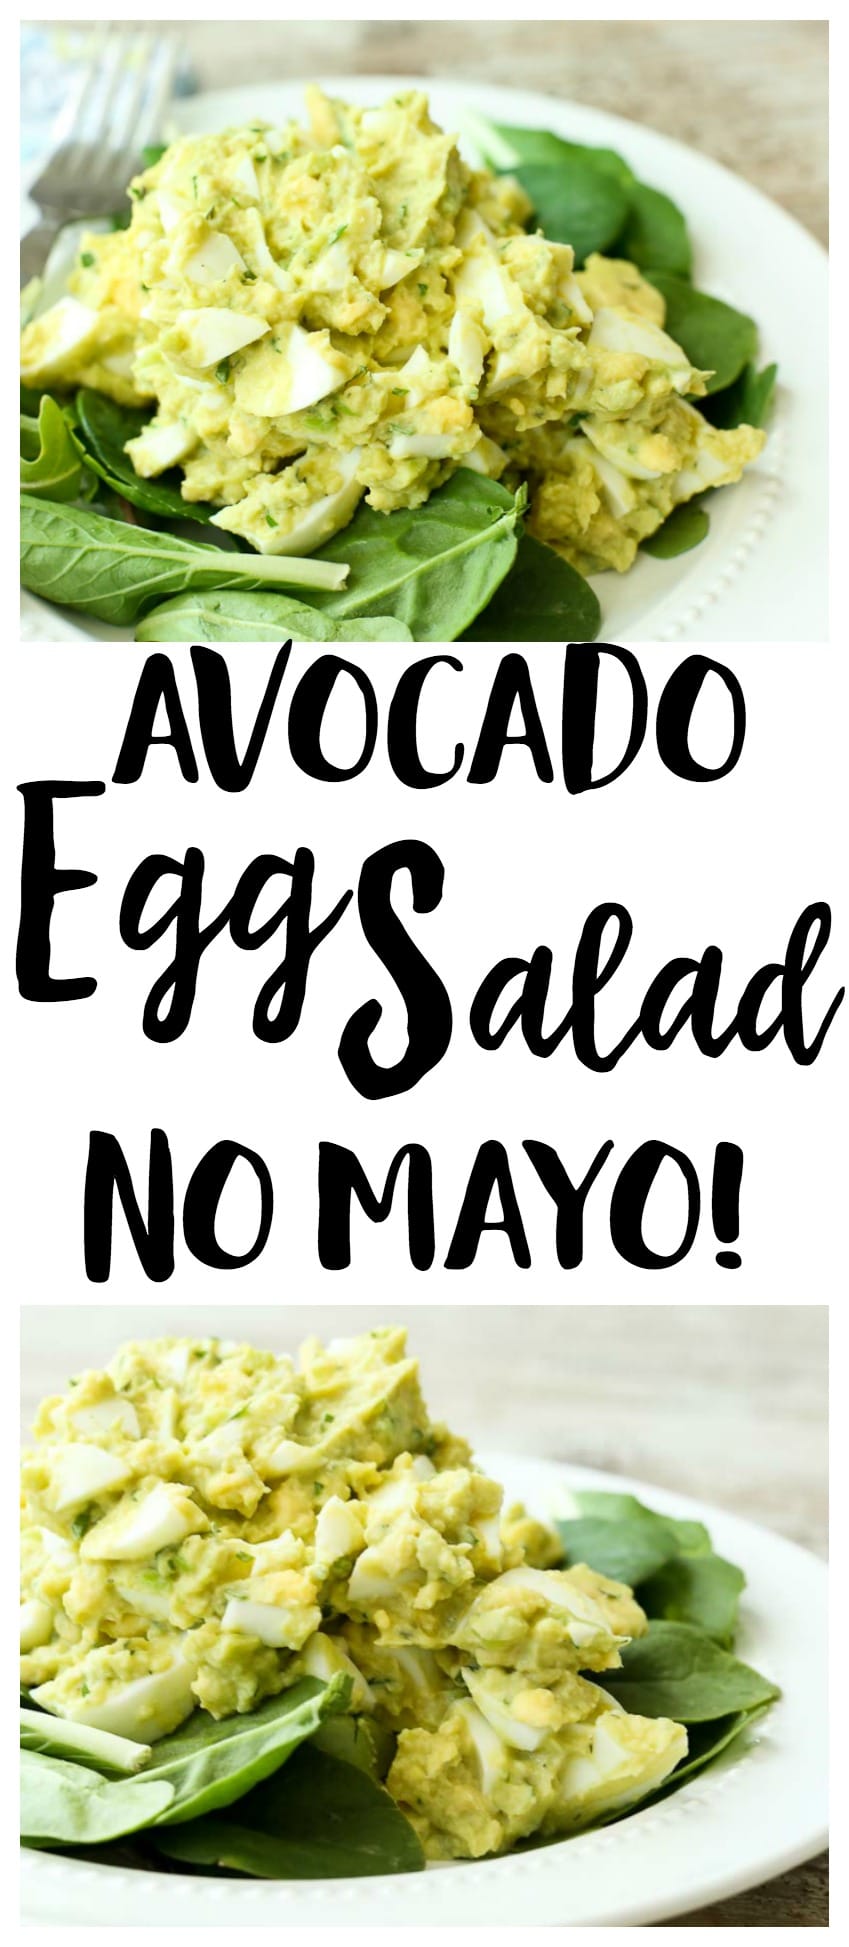 Avocado Egg Salad Recipe | no mayo | lunch recipe | gluten-free recipe | Paleo recipe | Whole30 recipe | low carb recipe